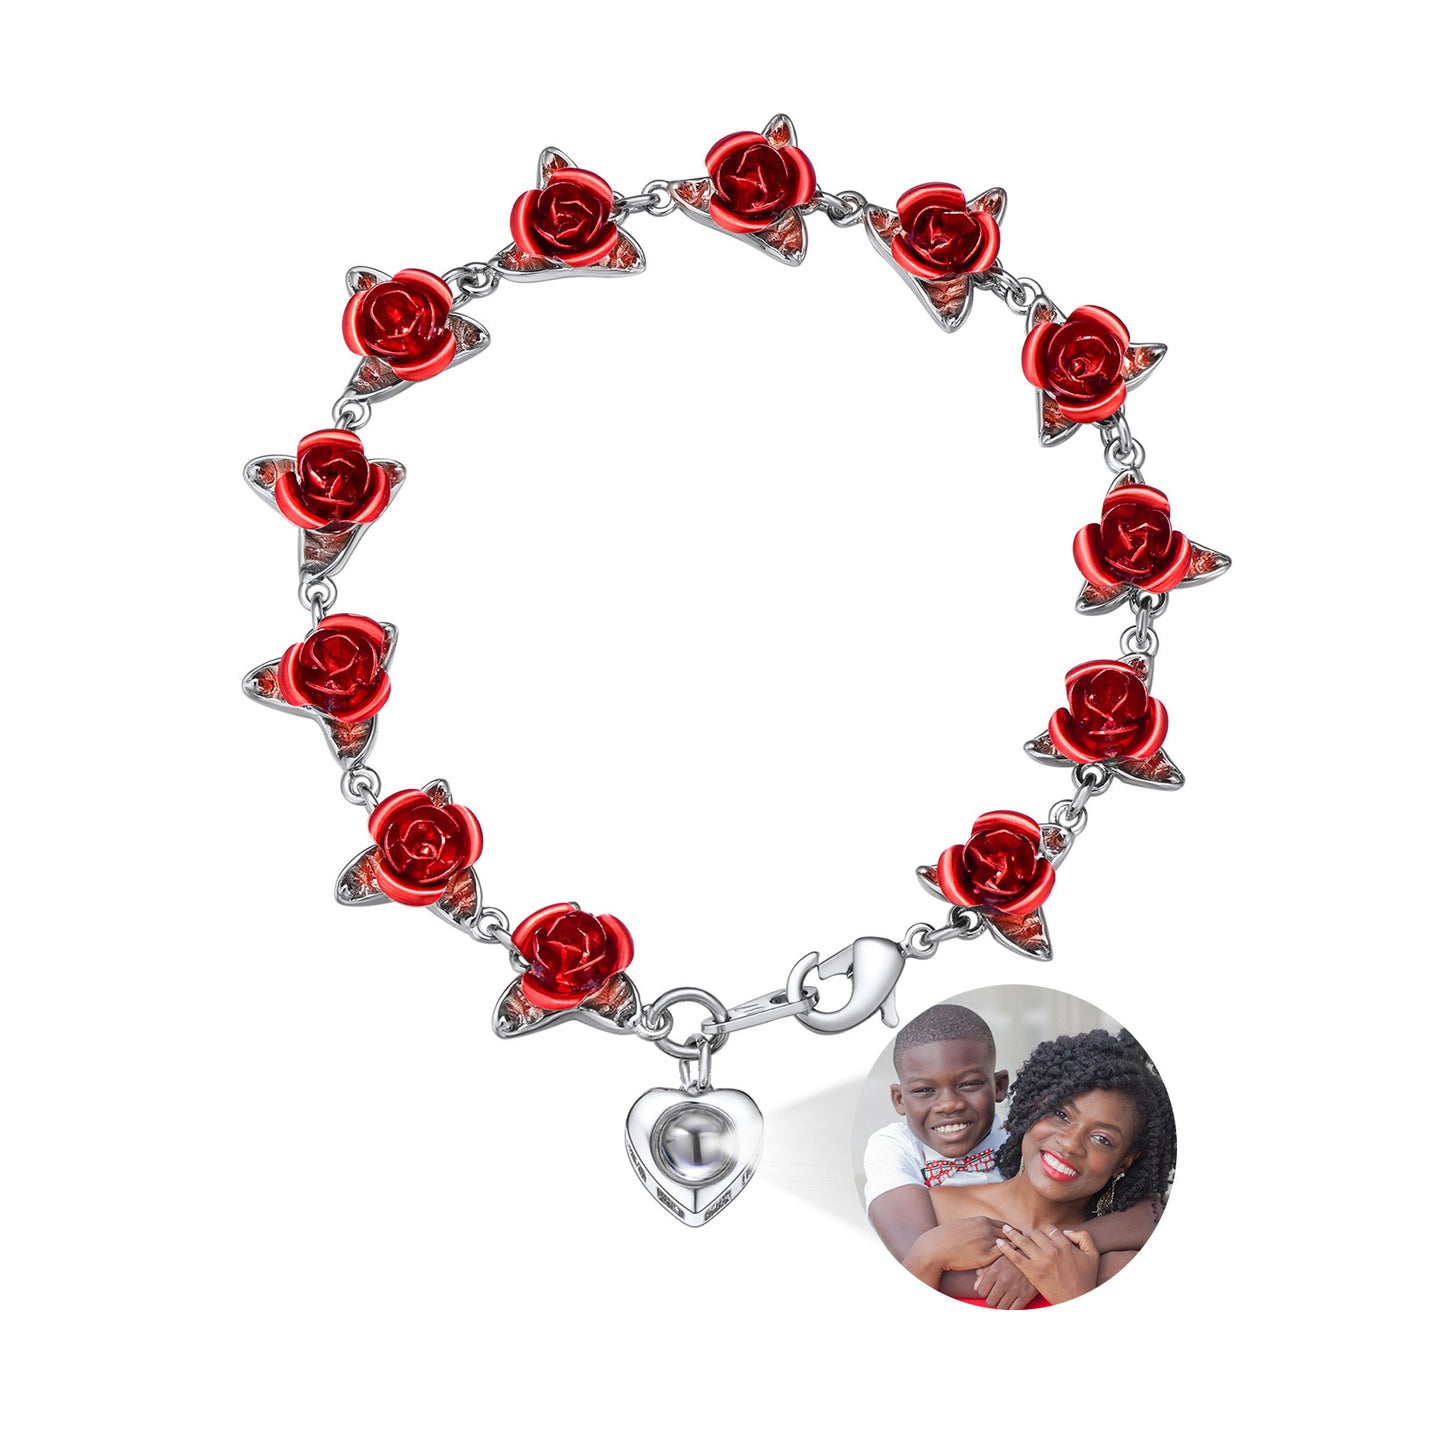 Personalized Rose Flower Heart Photo Projection Bracelet for Women